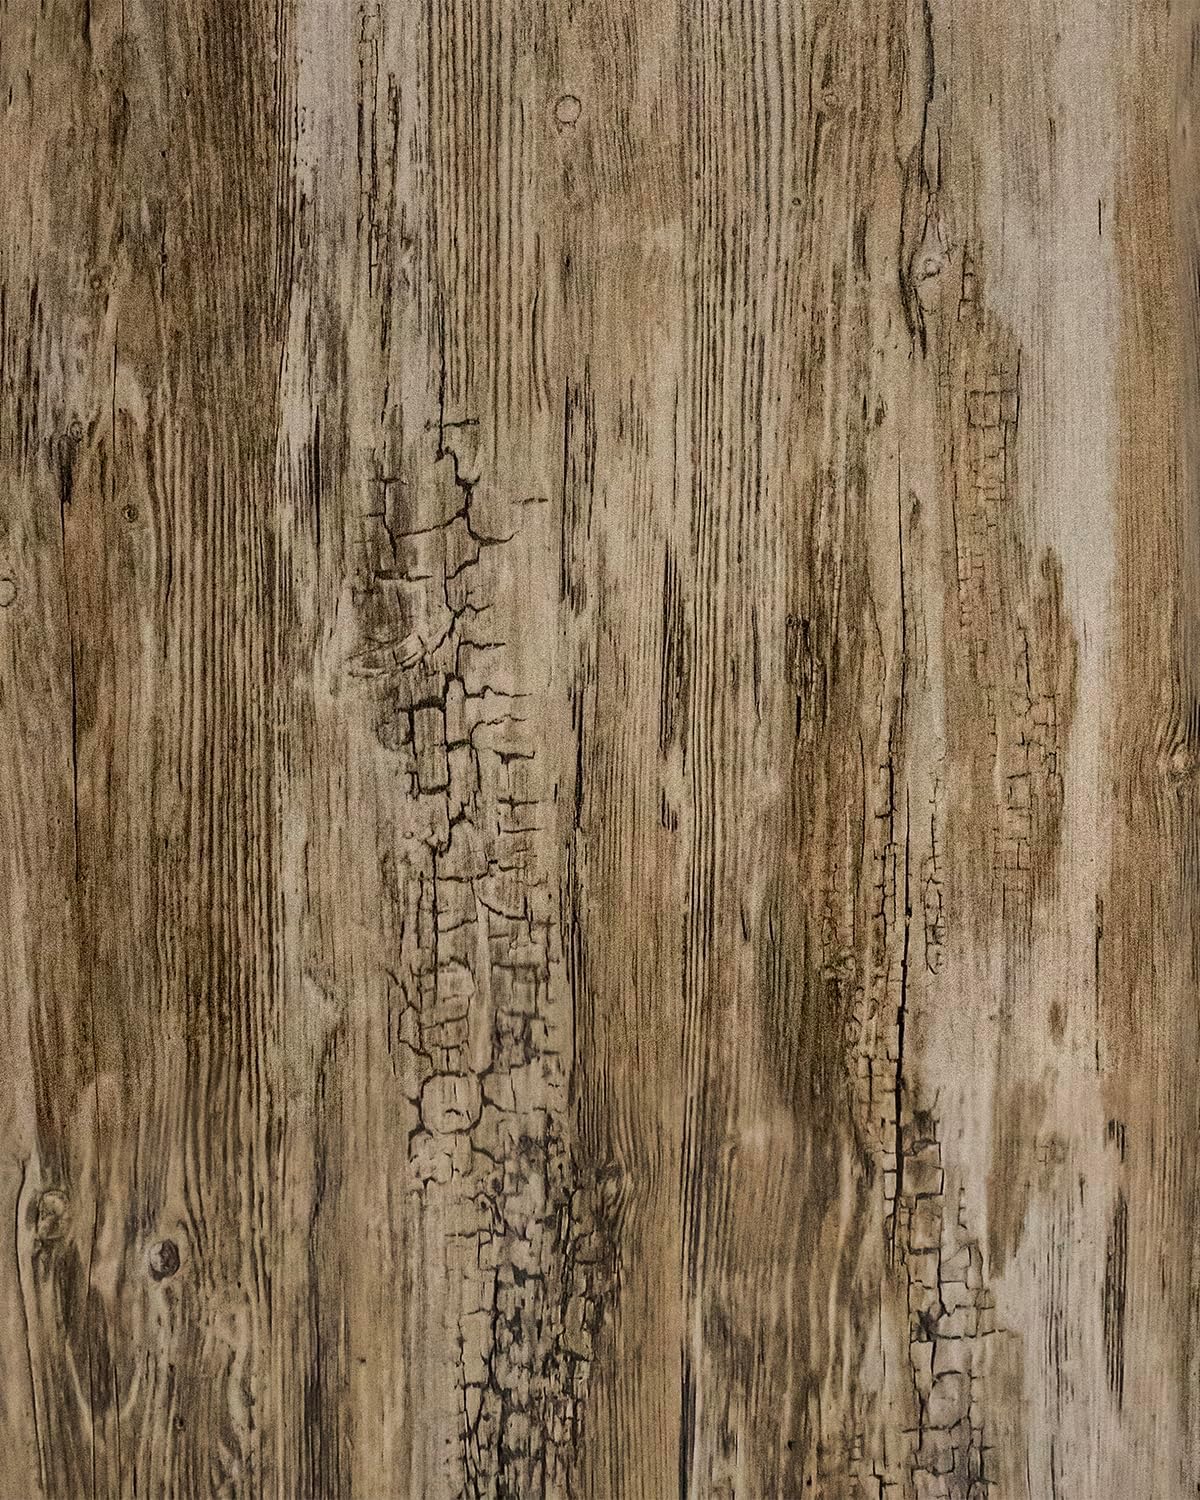 Livebor Wood Contact Paper Distressed Wood Wallpaper Peel and Stick 17.7inch x 118.1inch Rustic Woodgrain Contact Paper Wood Textured Peel and Stick Wallpaper Countertops Waterproof Wall Paper Vinyl